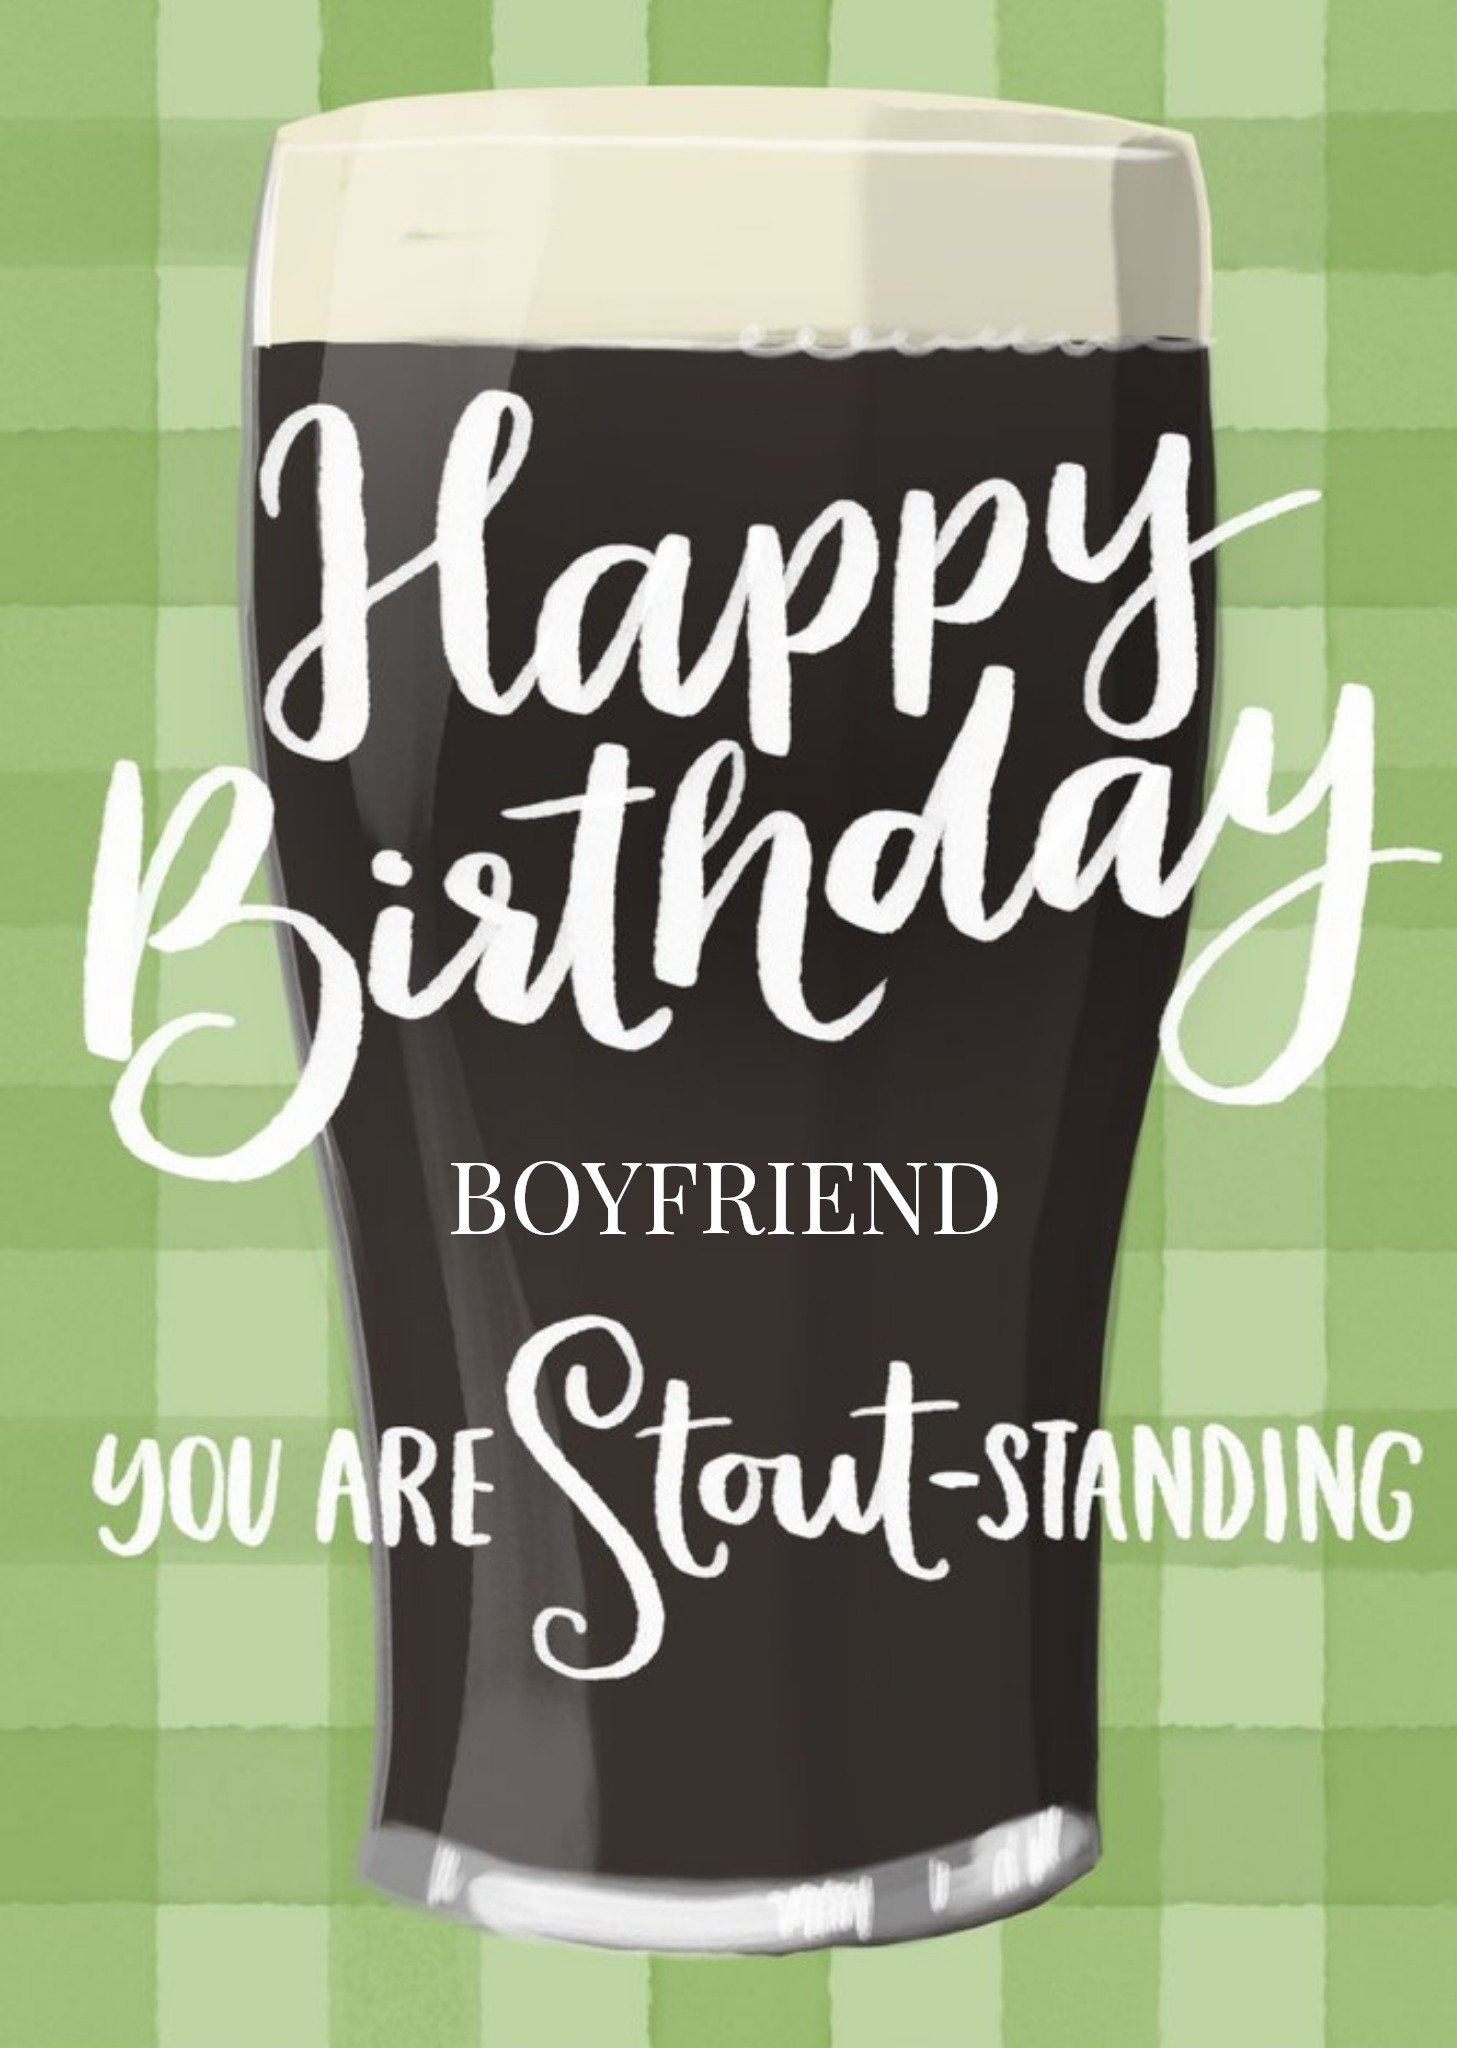 Moonpig Illustrated Stout-Standing Customisable Birthday Card Ecard